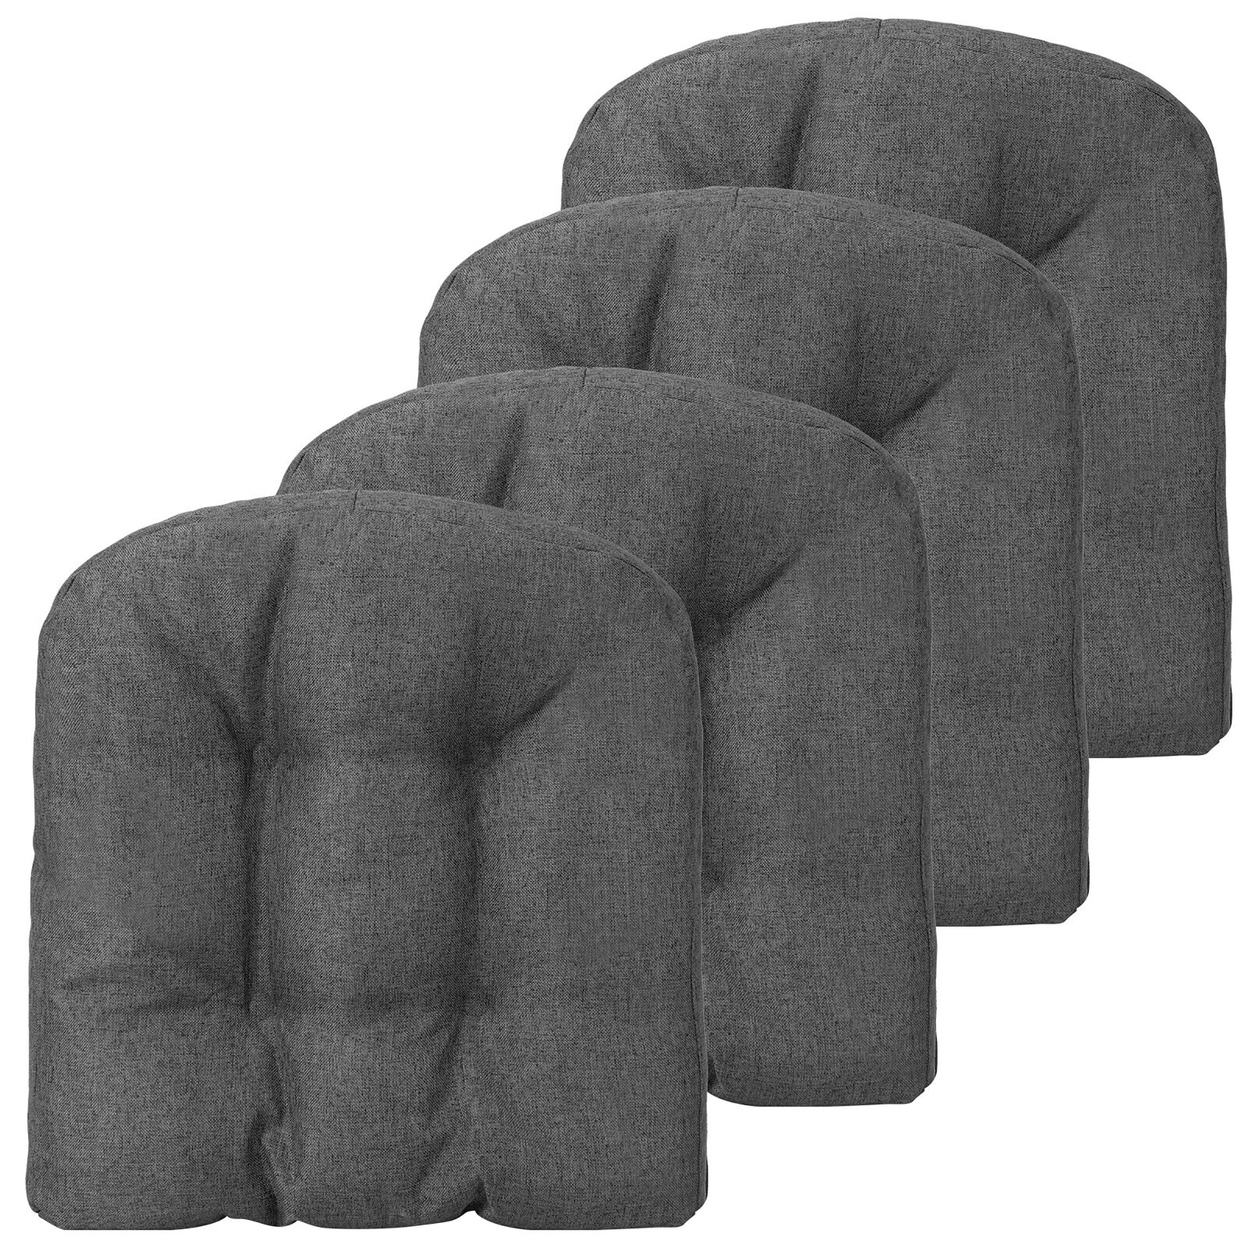 4 Pcs Patio Dining Chair Cushions U-Shaped Chair Pads Non-Slip Bottom - Grey